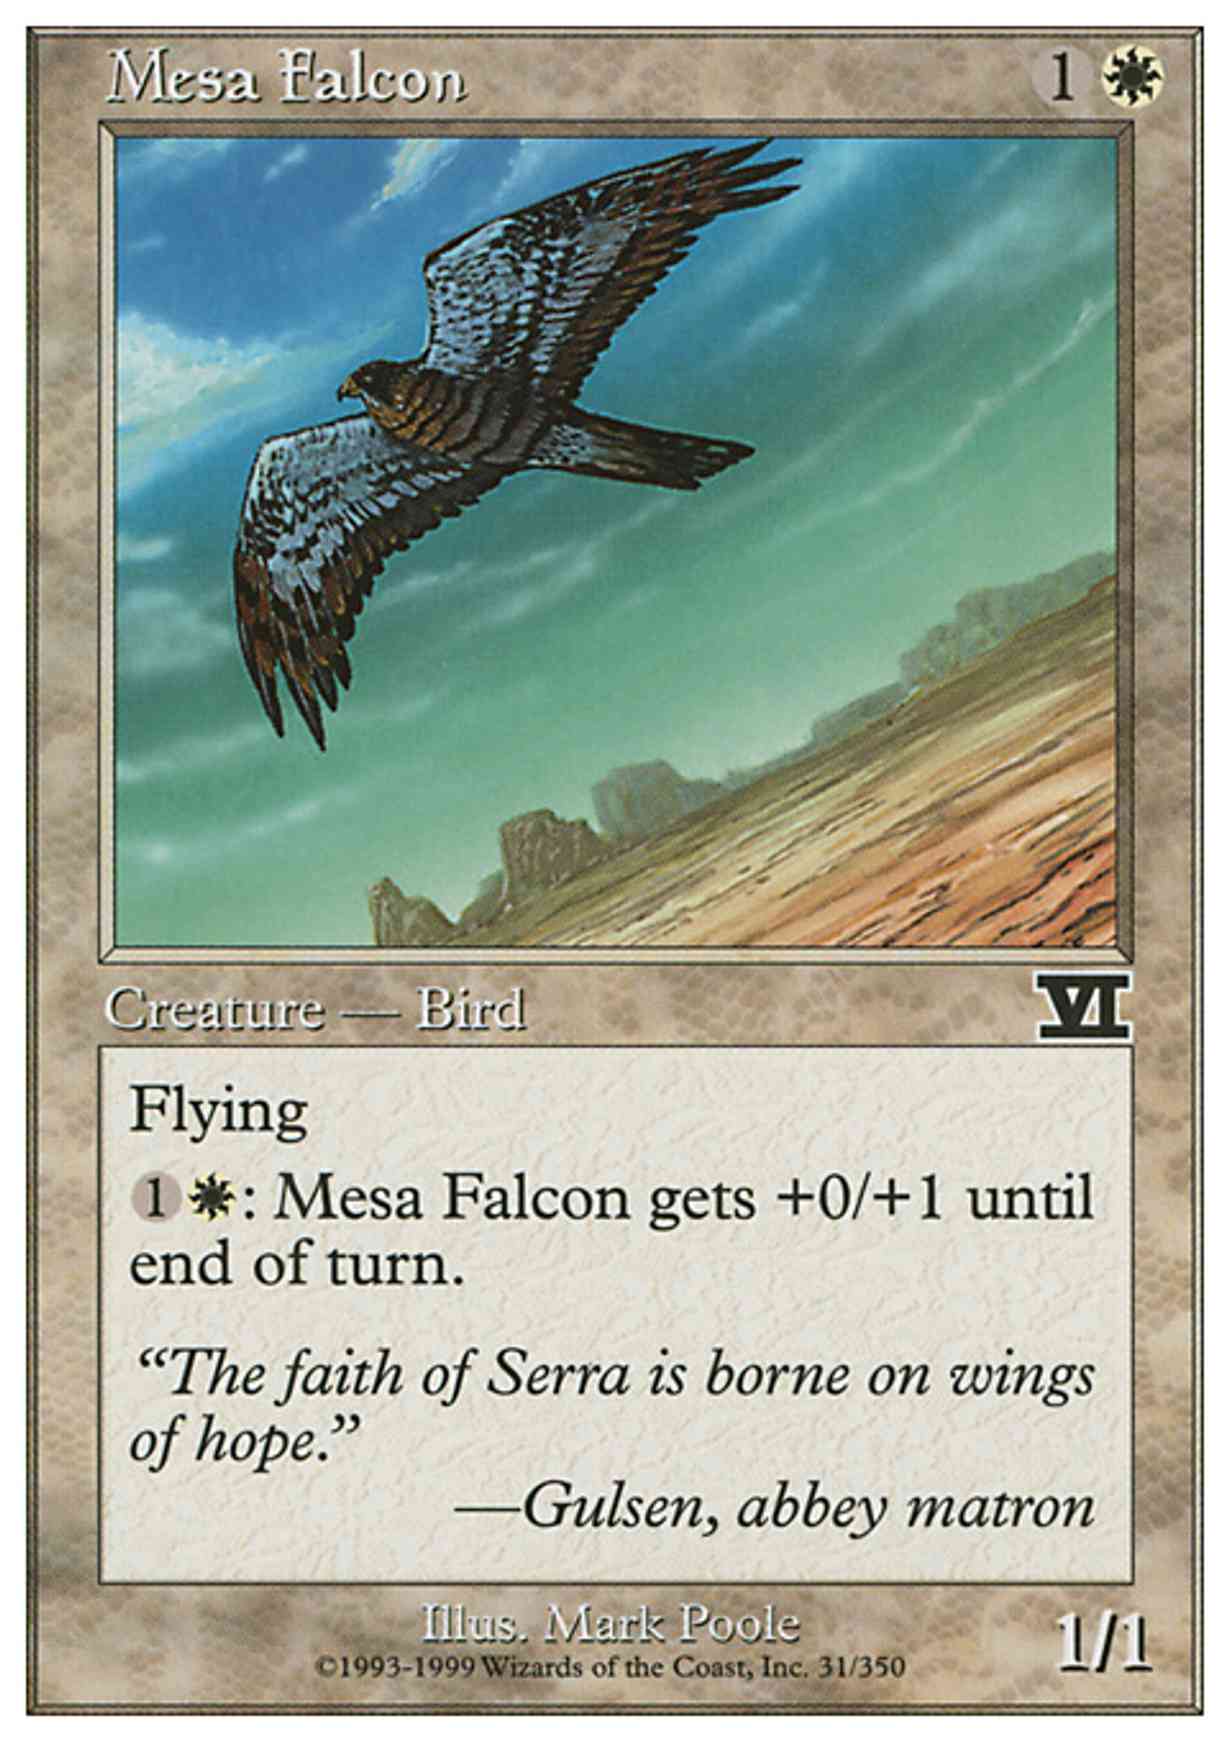 Mesa Falcon magic card front